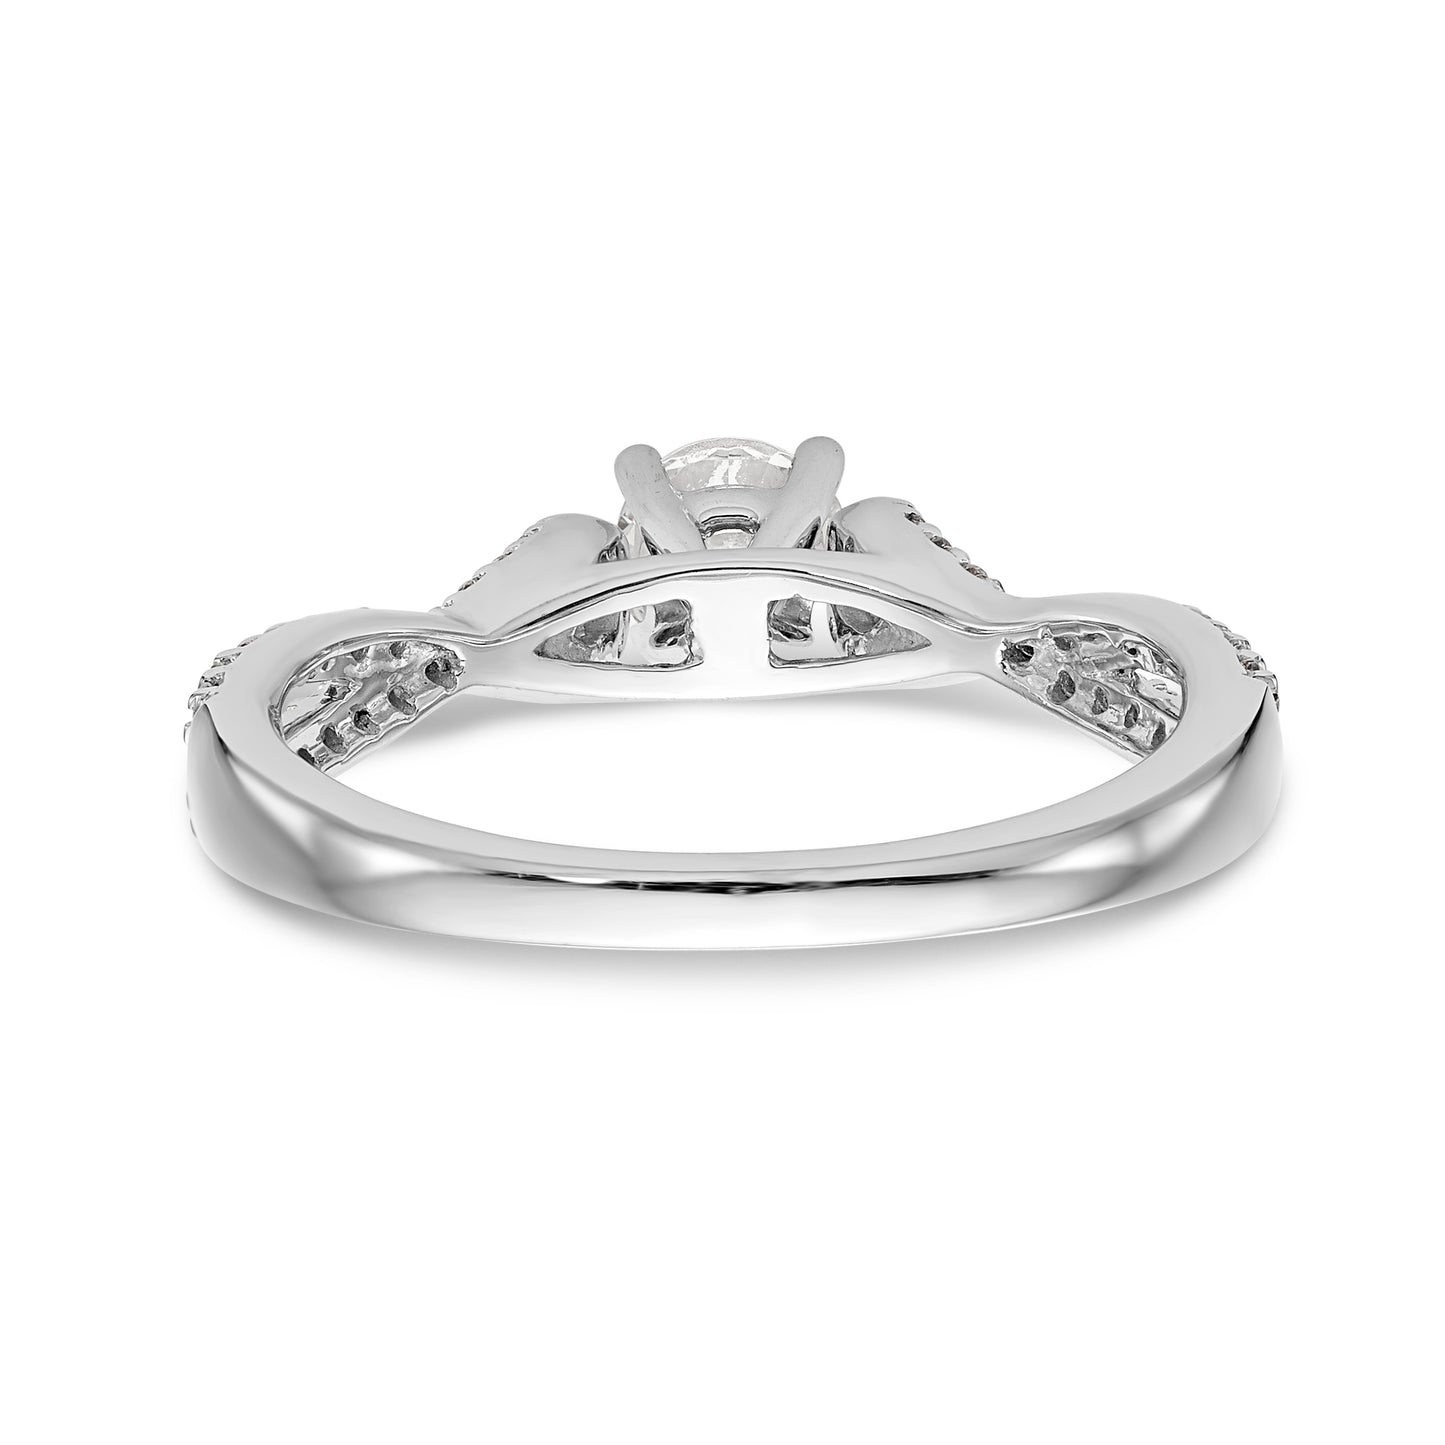 14kw Peg Set Simulated Diamond Criss Cross Engagement Ring